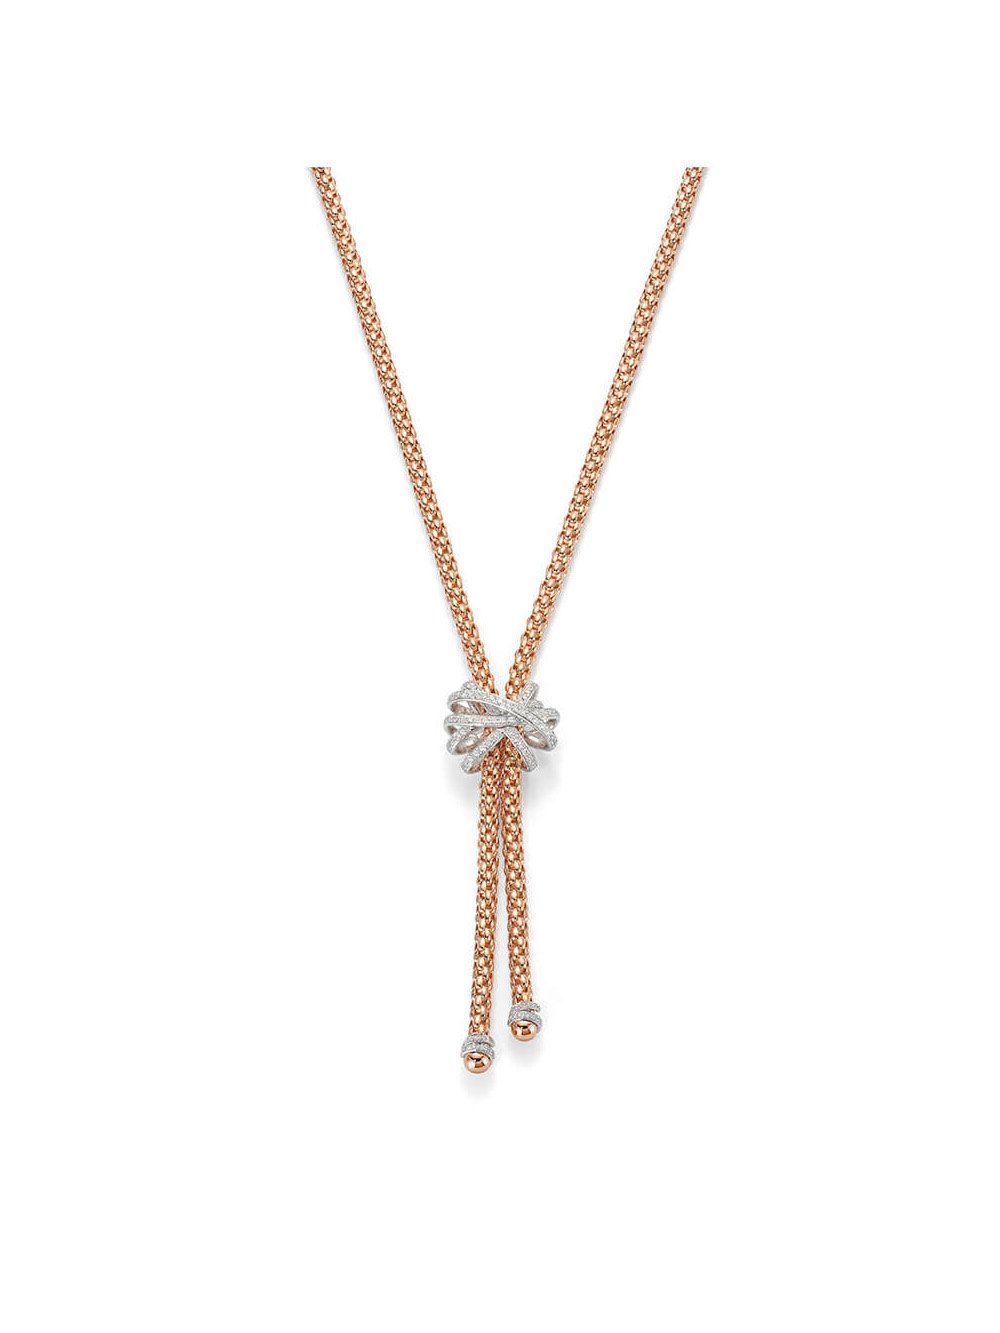 SALE Fope Solo Venezia Necklace in 18ct Rose Gold with Diamonds